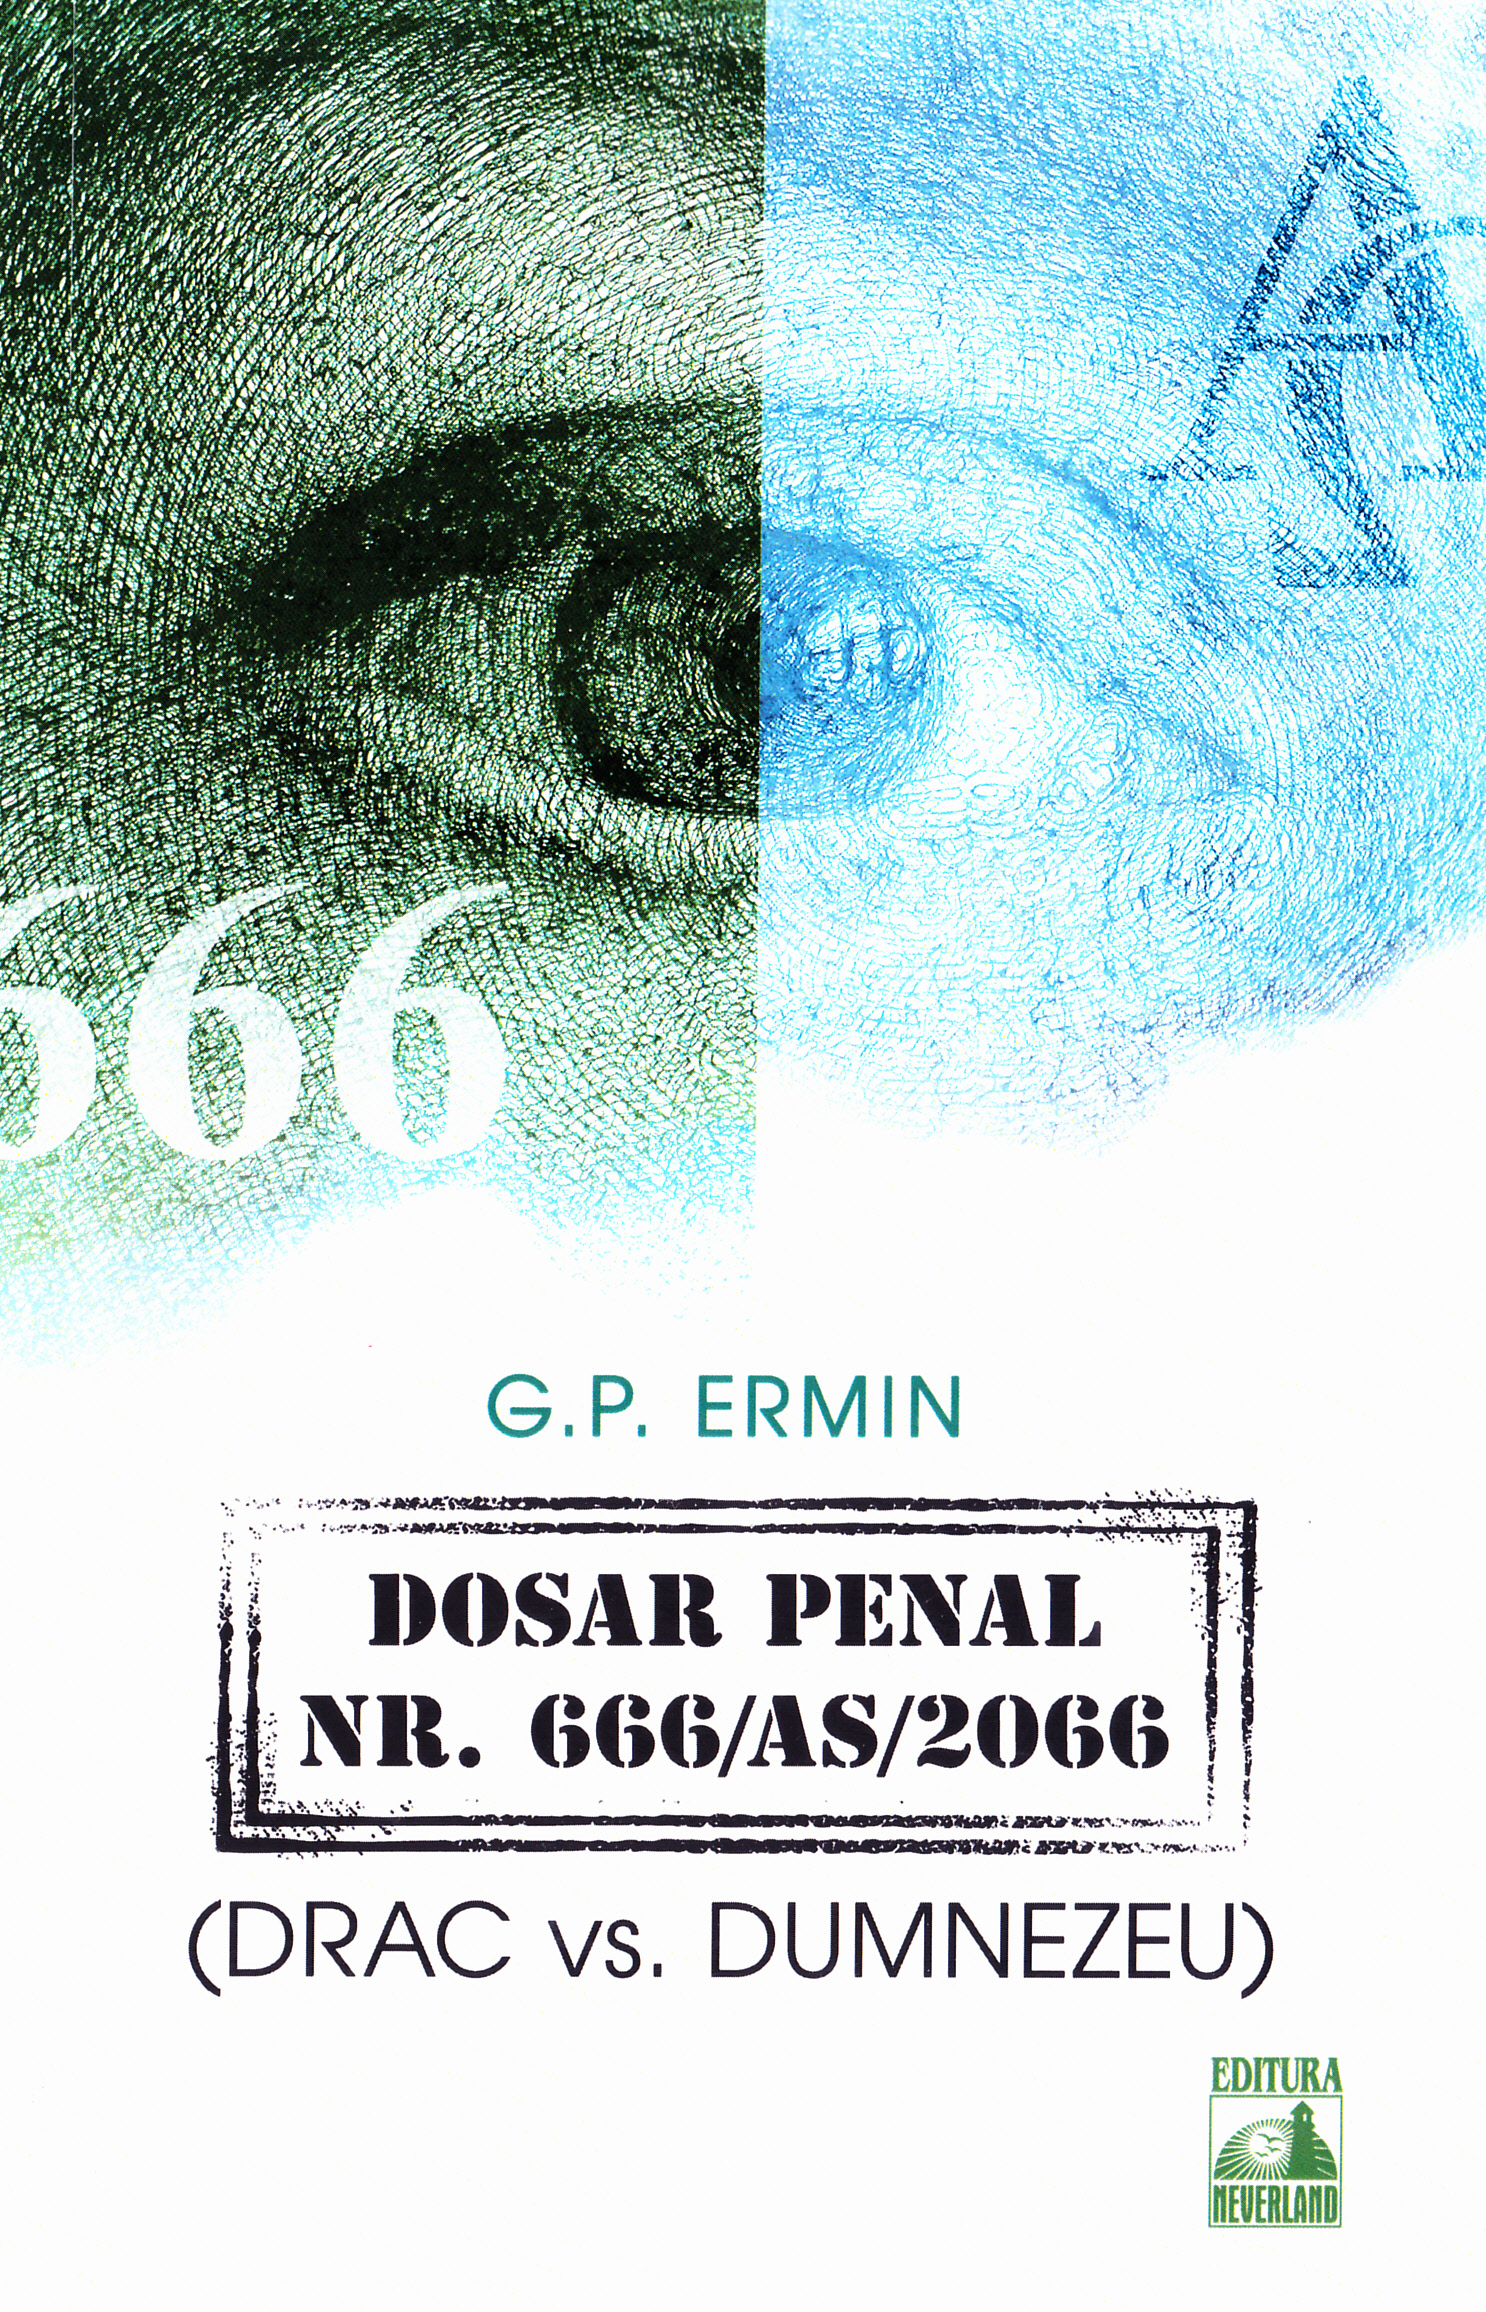 Dosar penal Nr. 666 AS 2066 - G.P. Ermin